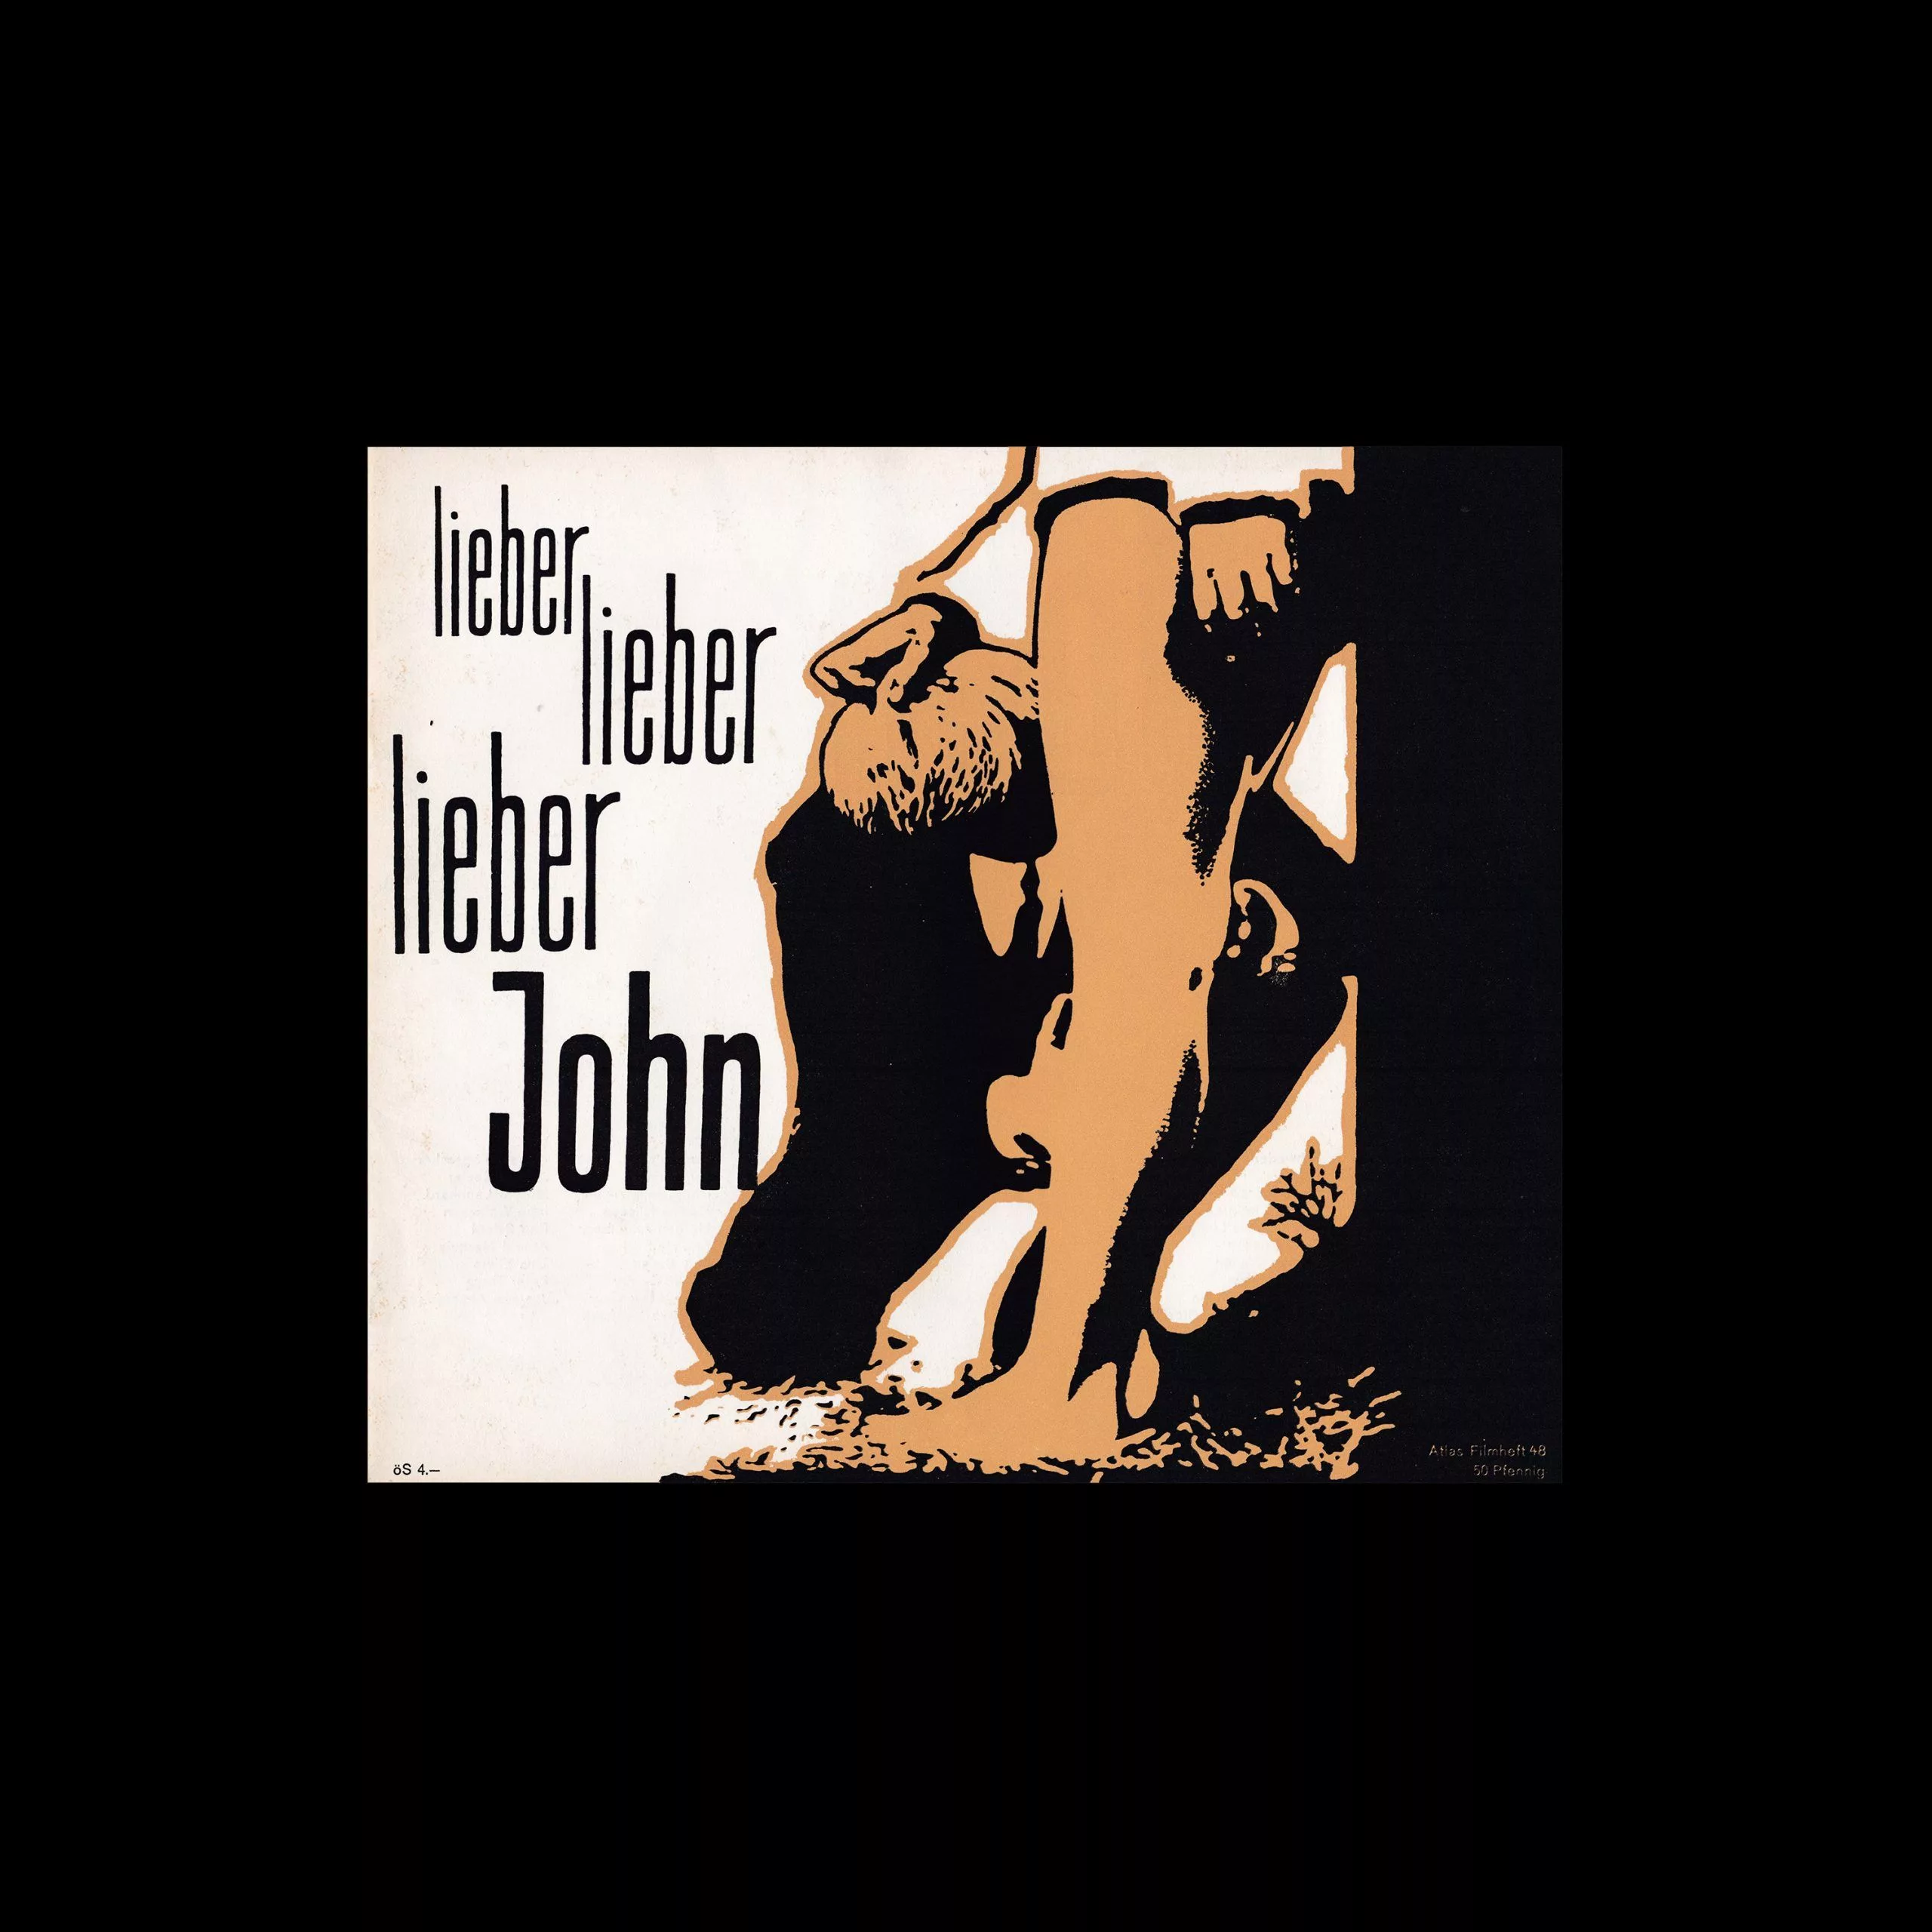 Atlas Filmheft 48 – Lieber John designed by Fischer-Nosbisch